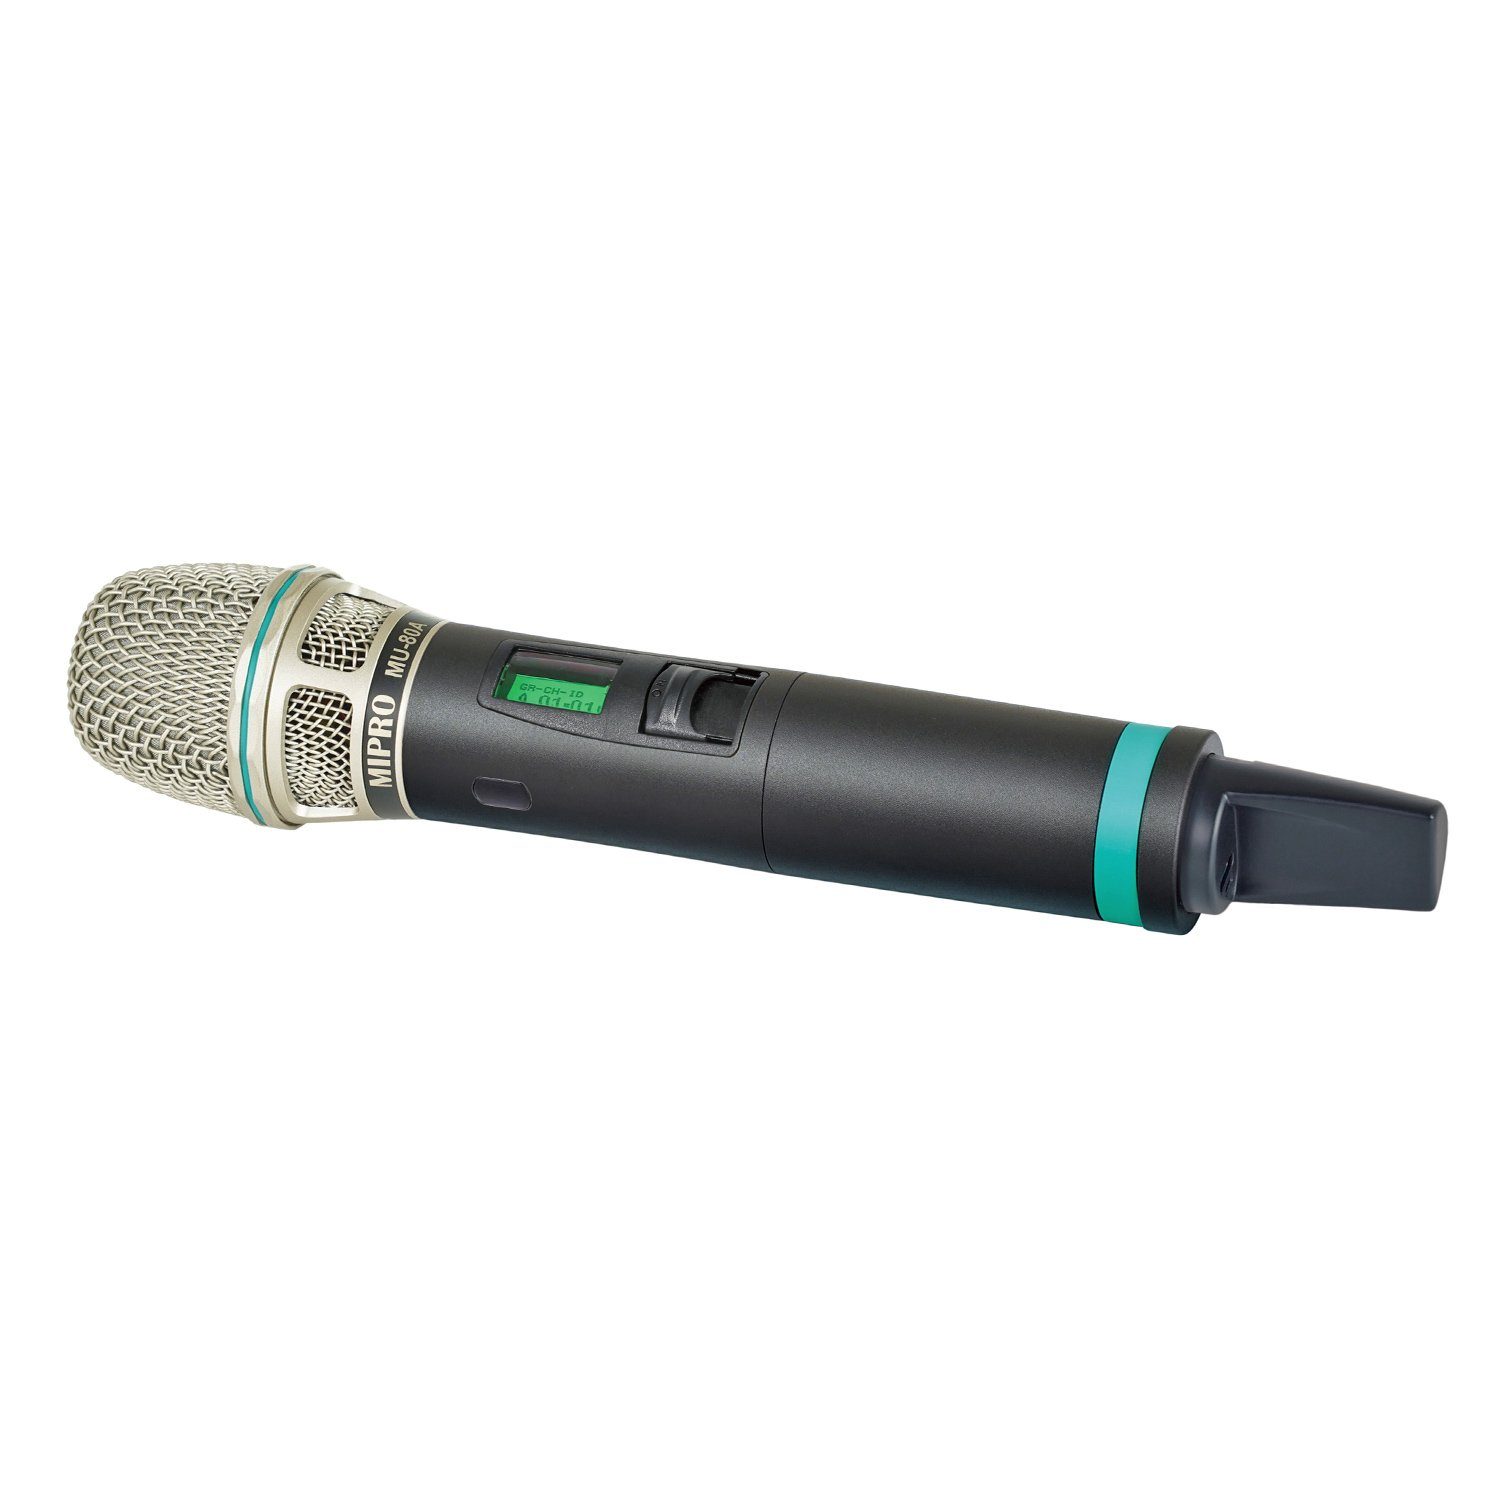 170 (Bluetooth, Empfangsmodul W) 1-Kanal Mikrofon MA-727 mit und Mipro Lautsprechersystem Audio